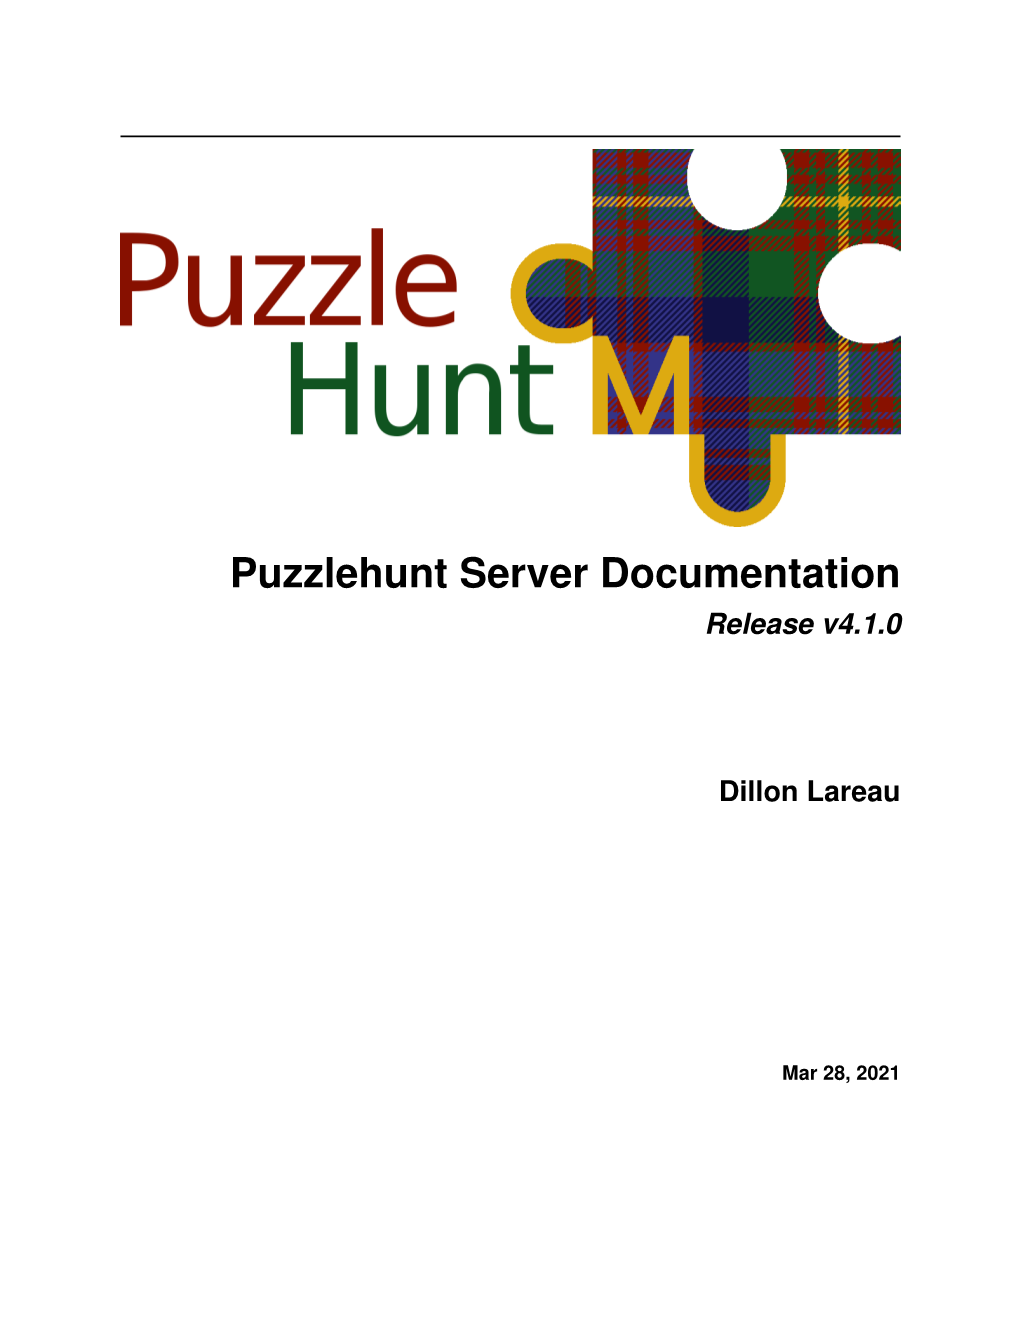 Puzzlehunt Server Documentation Release V4.1.0